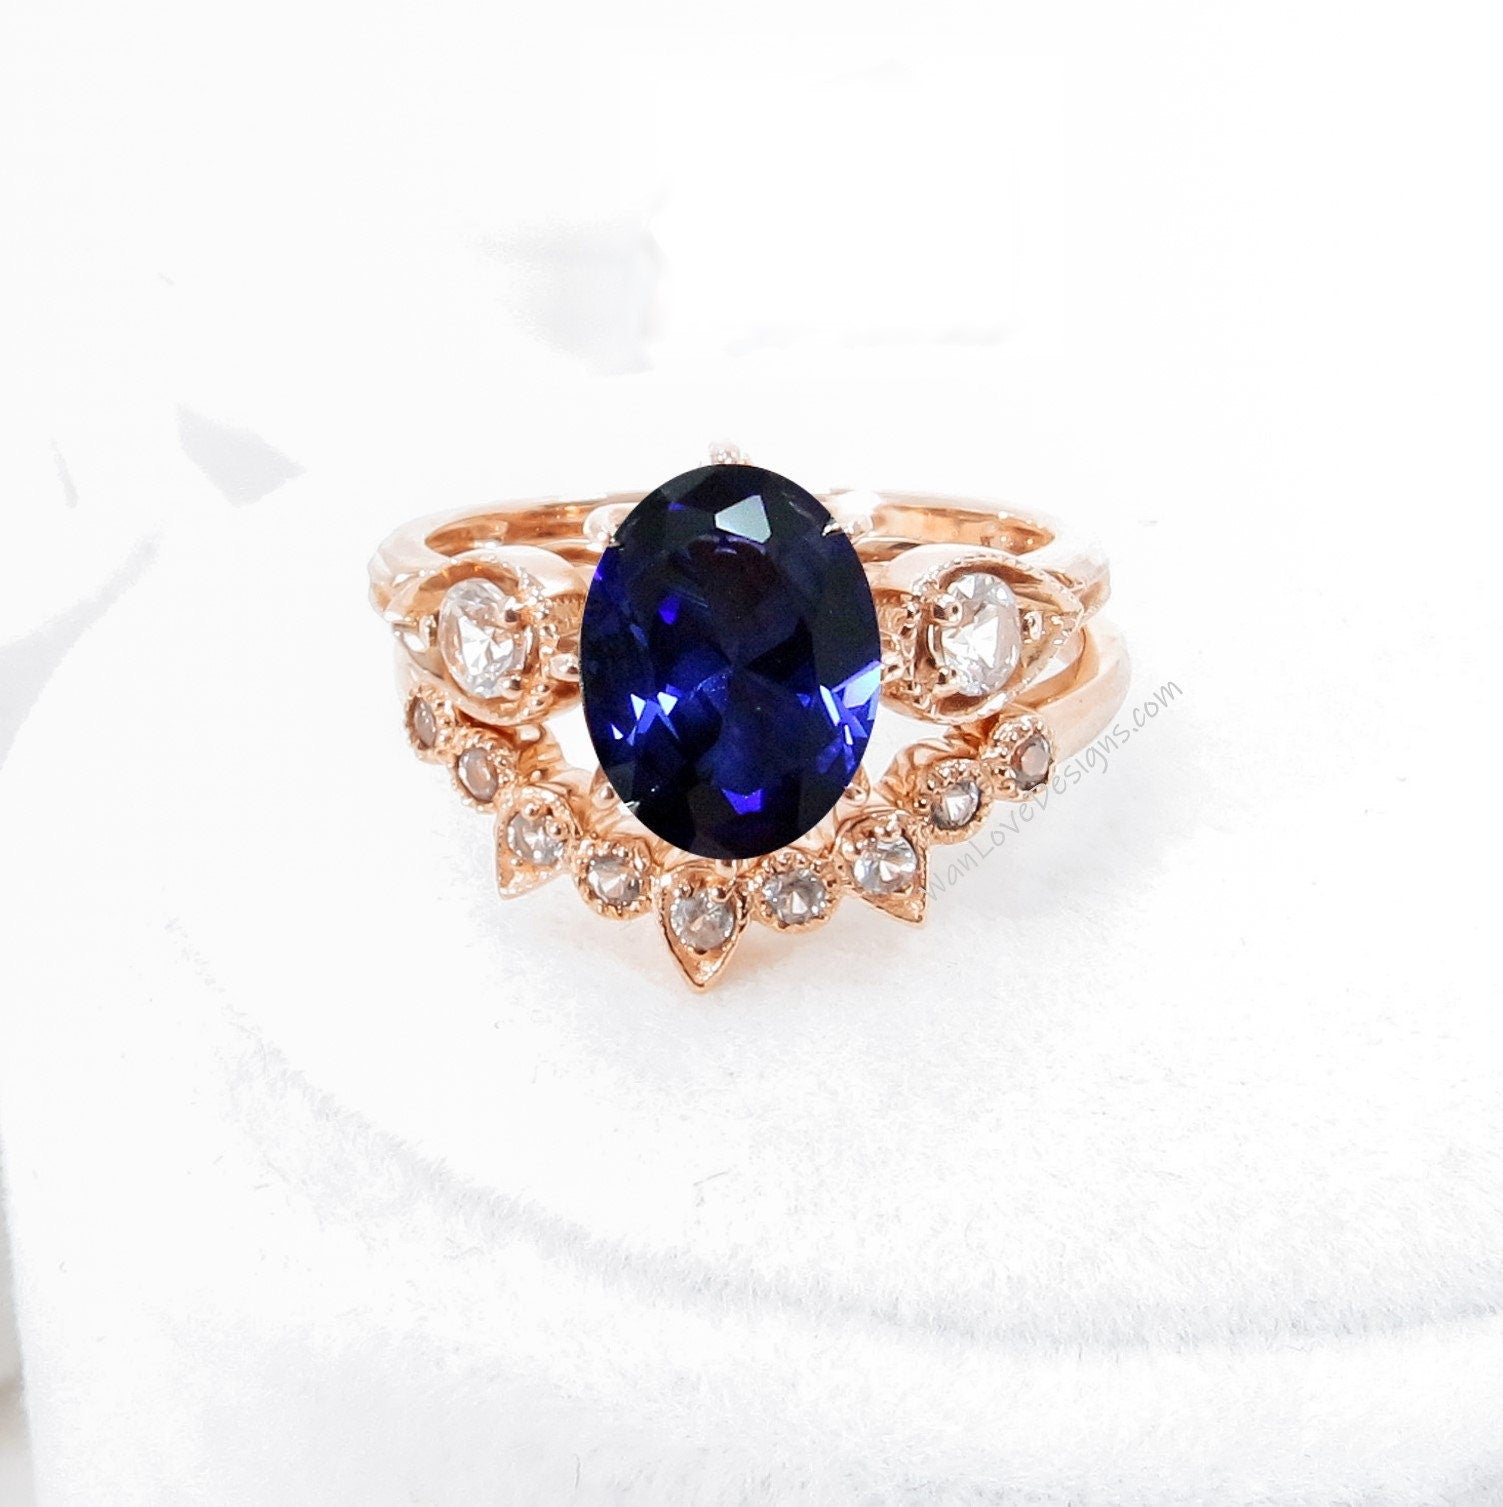 Unique Oval Shaped Blue Sapphire Engagement Ring Boho Bridal Ring Set U Shape Wedding Band Solid 14k Real Rose Gold Alternative Wedding Ring Wan Love Designs